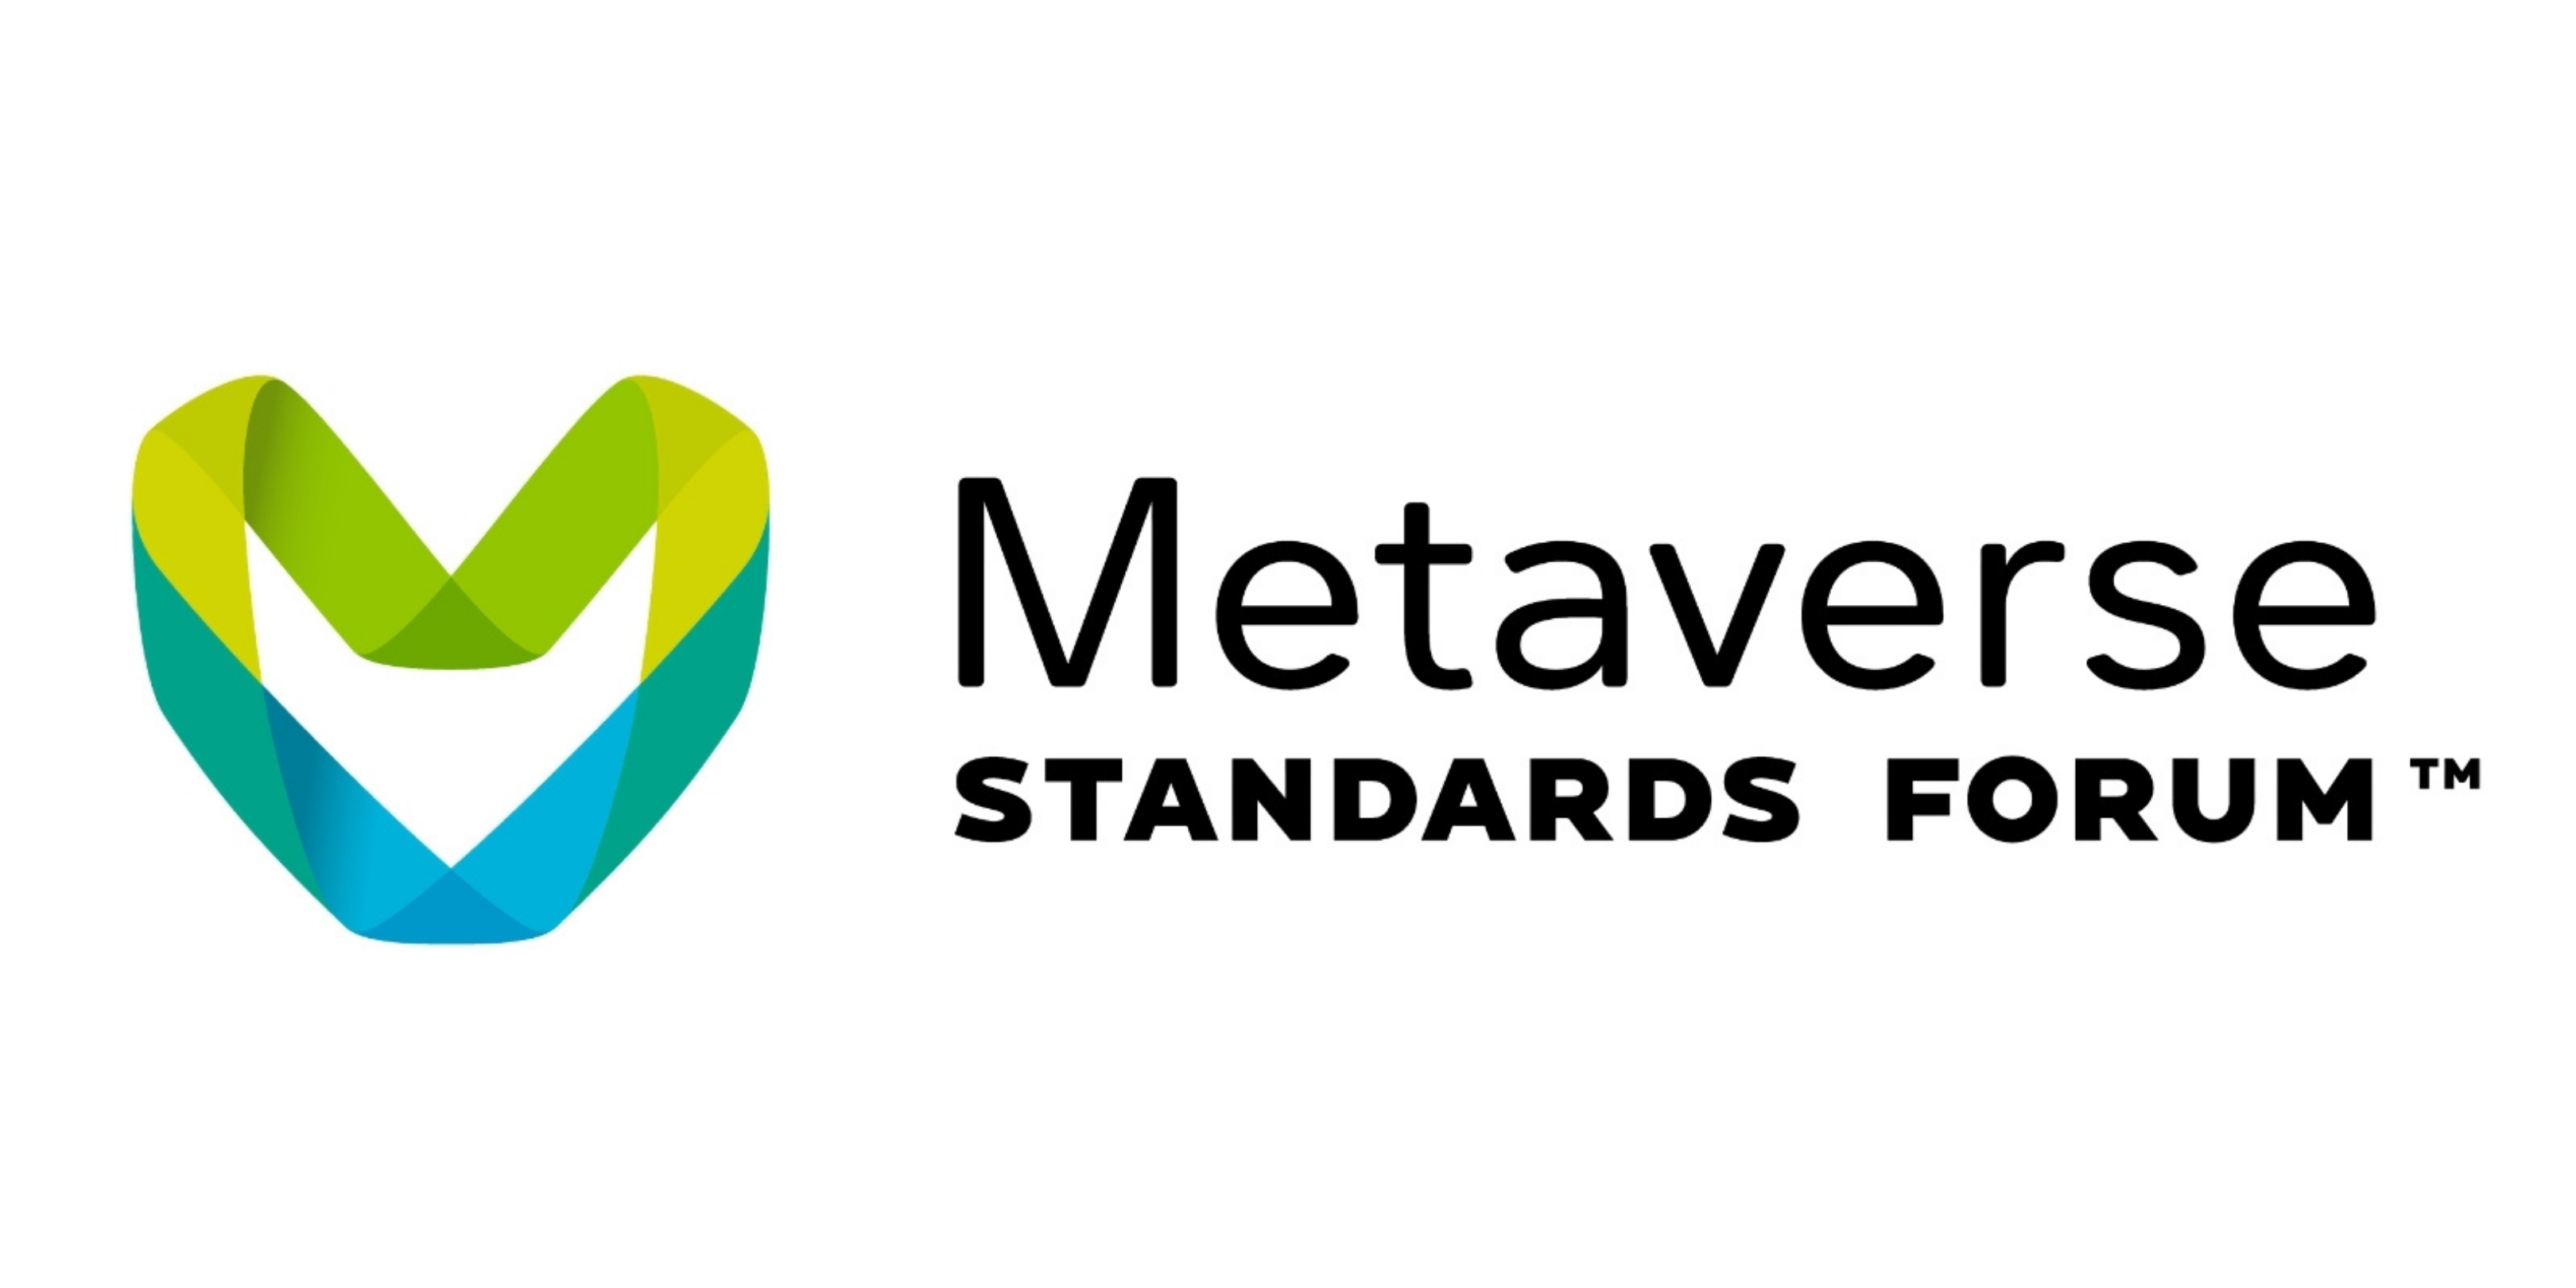 Access Alert | Launch of Metaverse Standards Forum